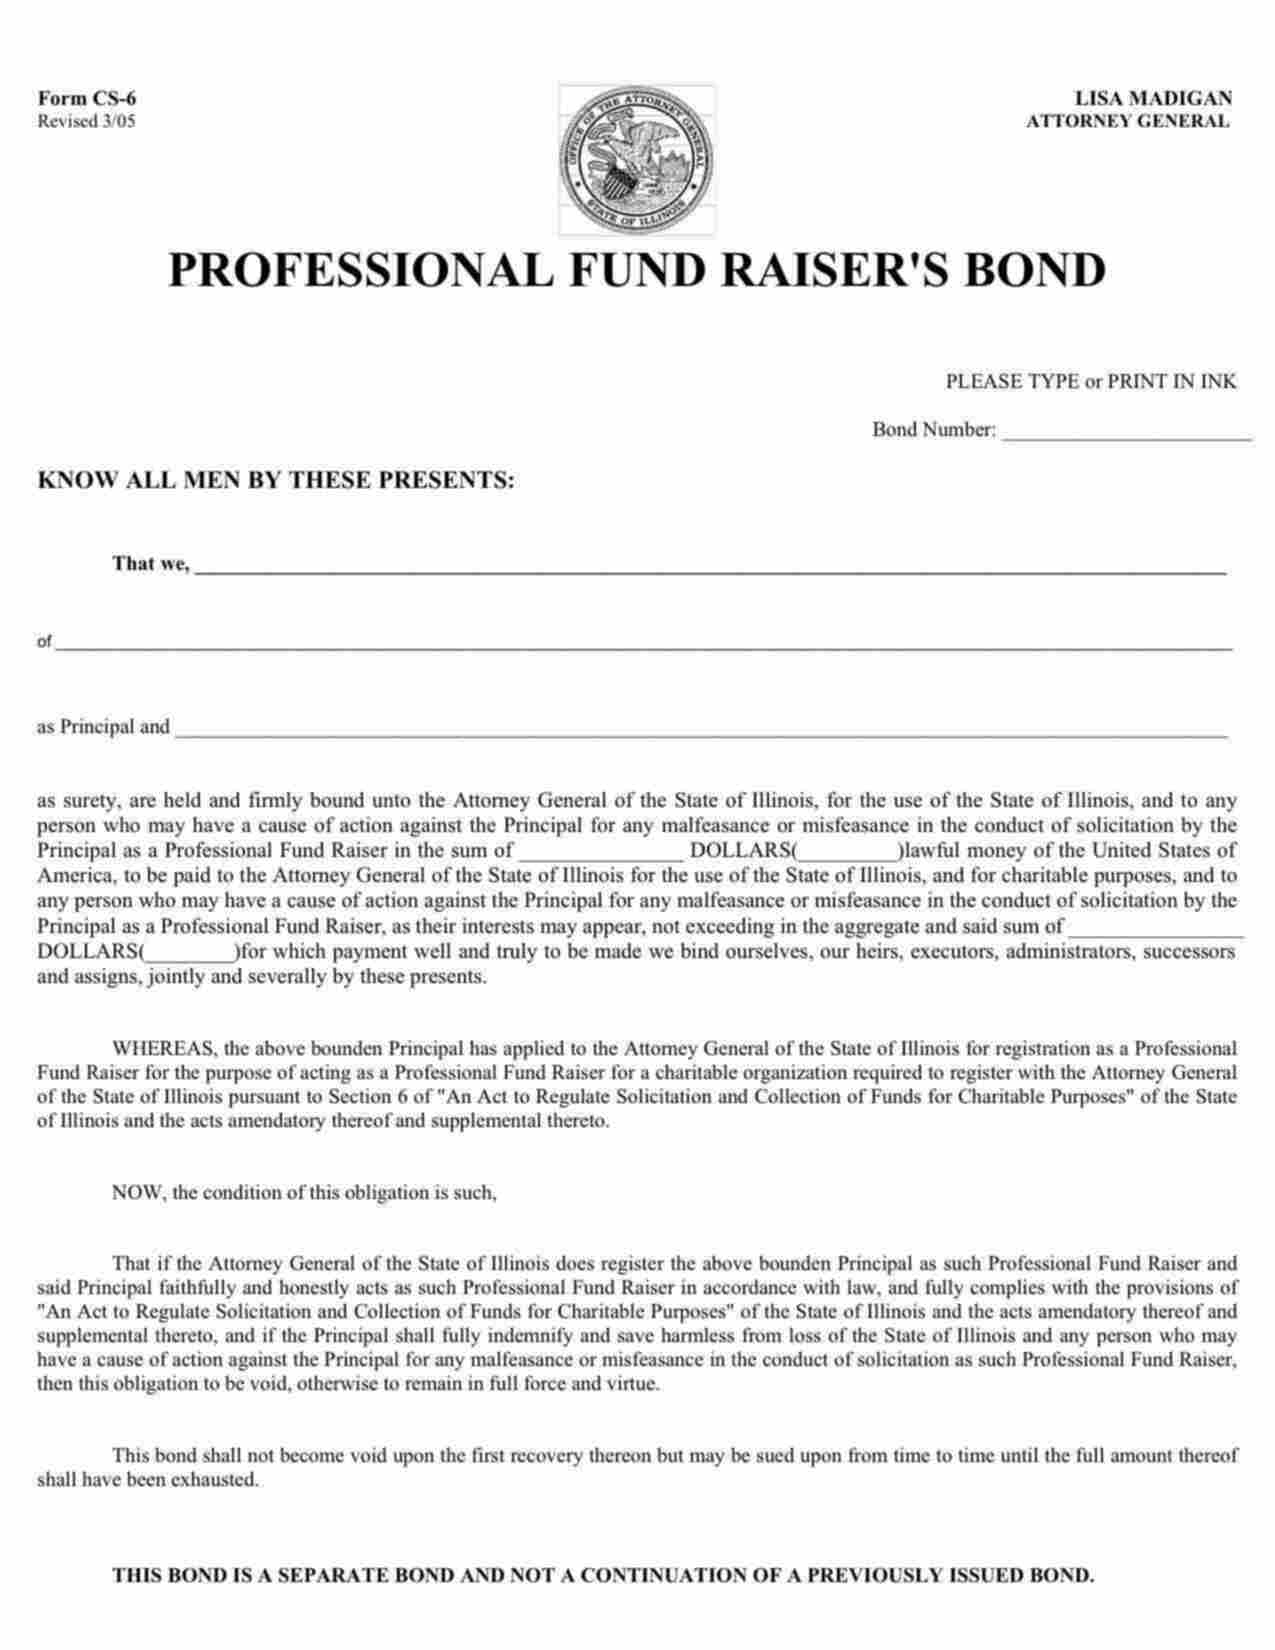 Illinois Professional Fund Raiser Bond Form